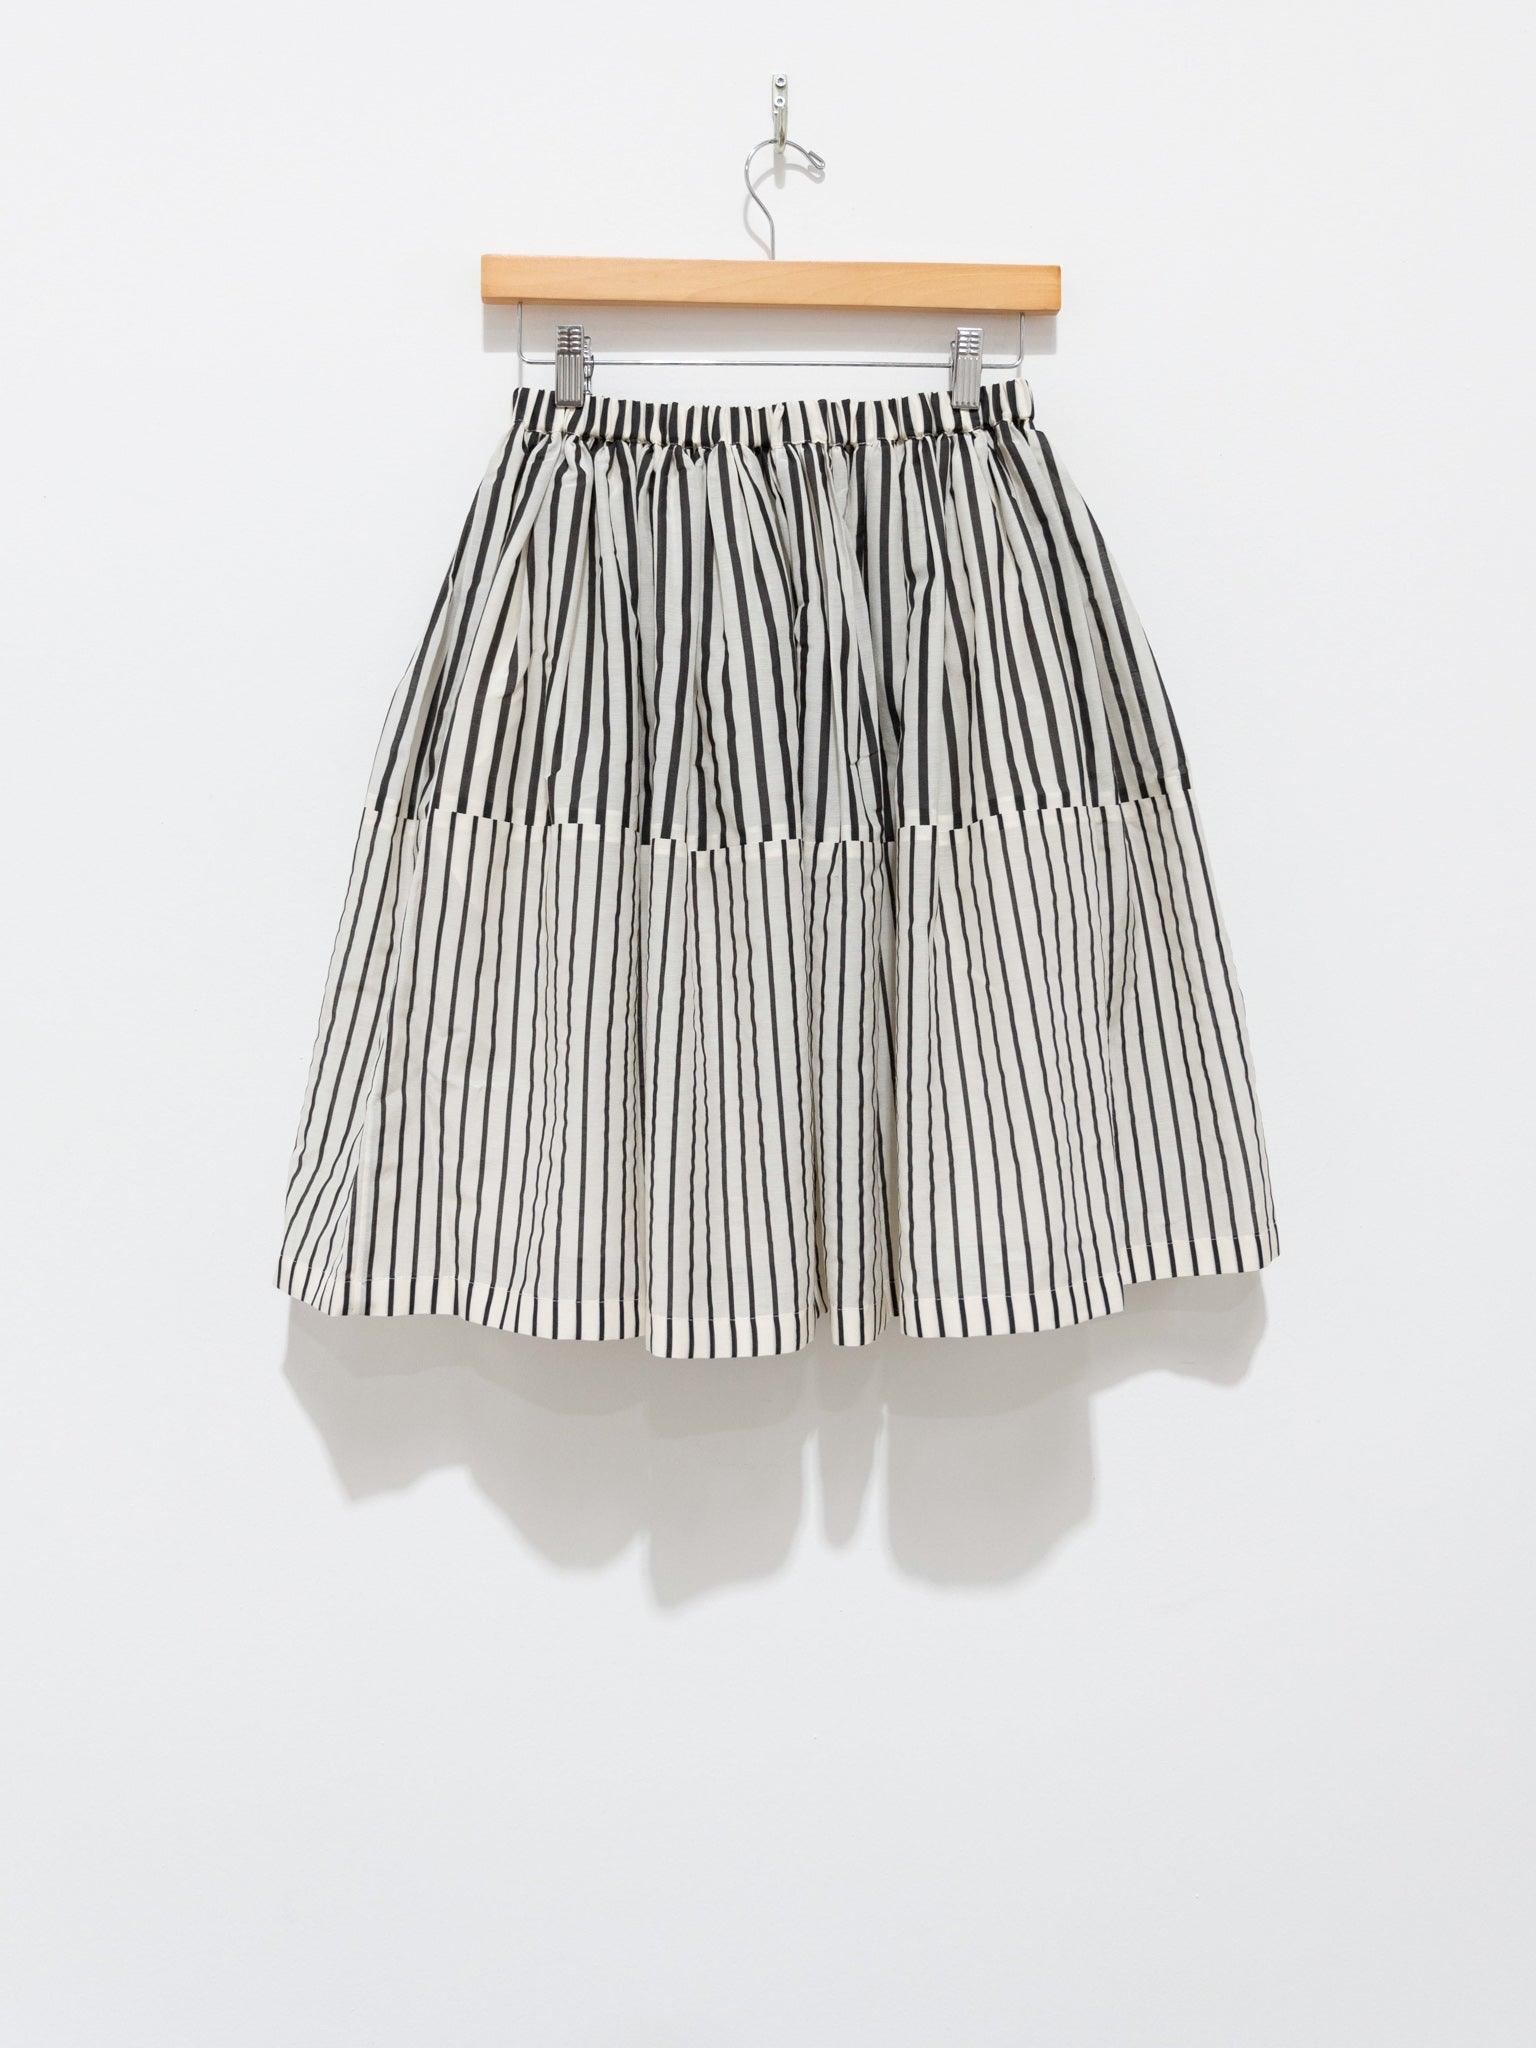 Namu Shop - Sara Lanzi Gathered Skirt - Stripes